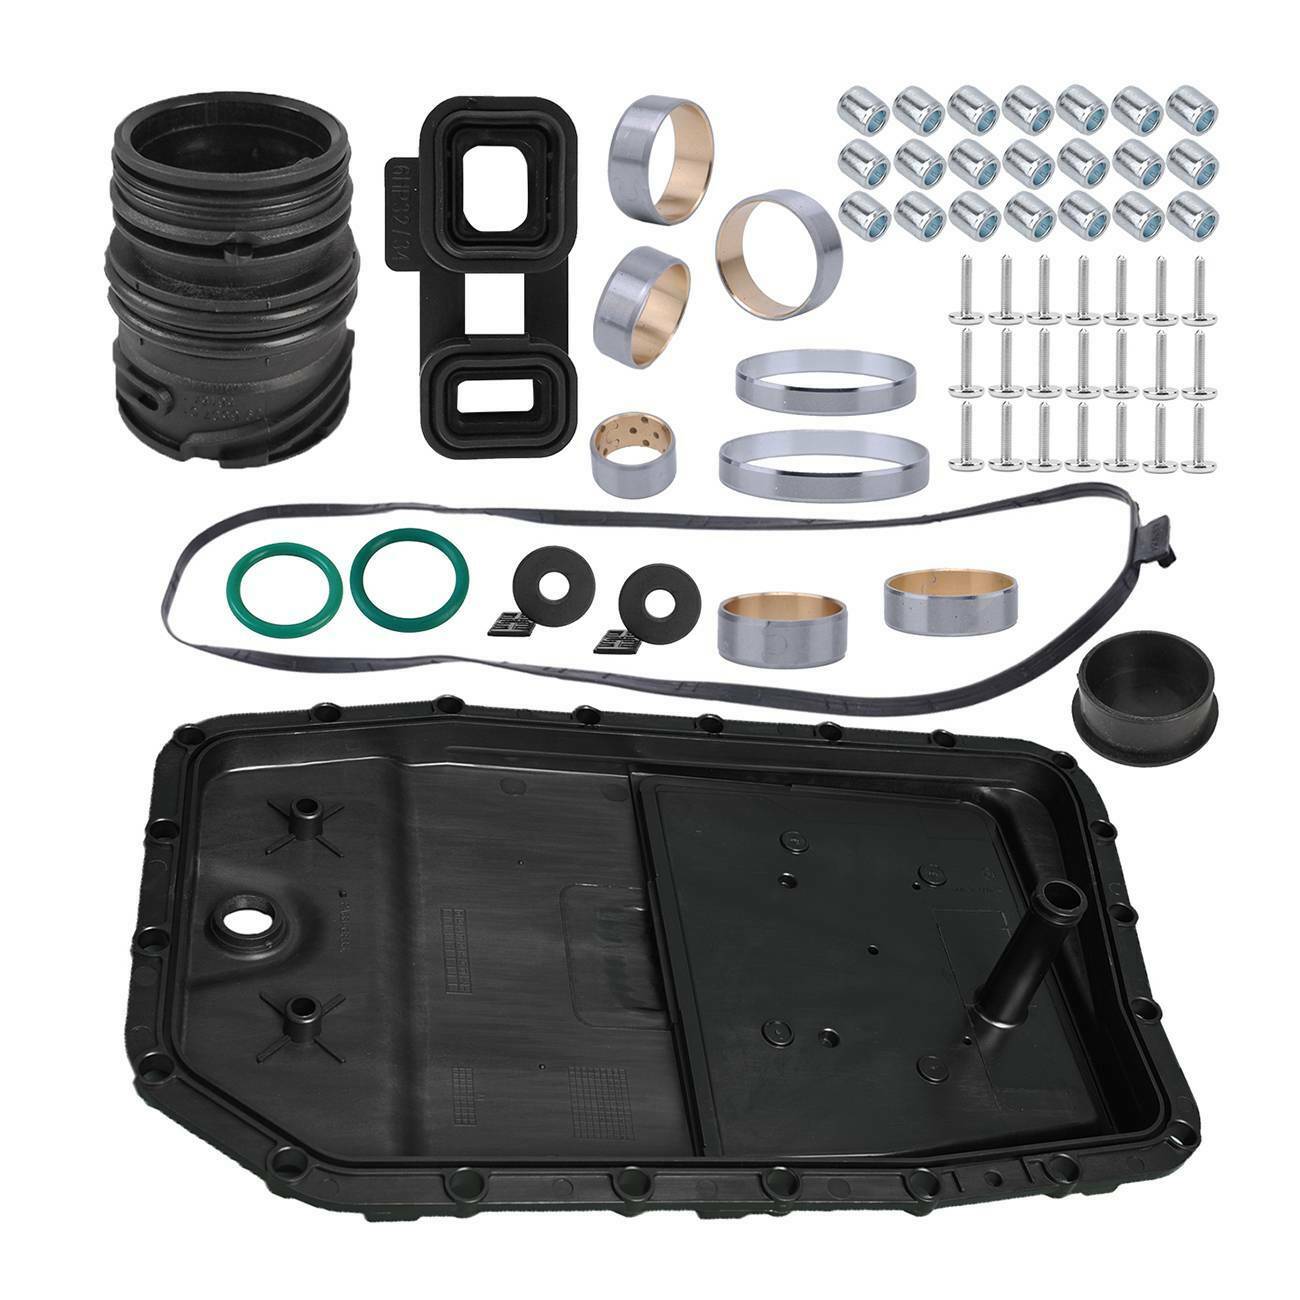 Auto Trans Oil Pan Filter + Repair Kit + Gasket for BMW E60 E70 E83 E90